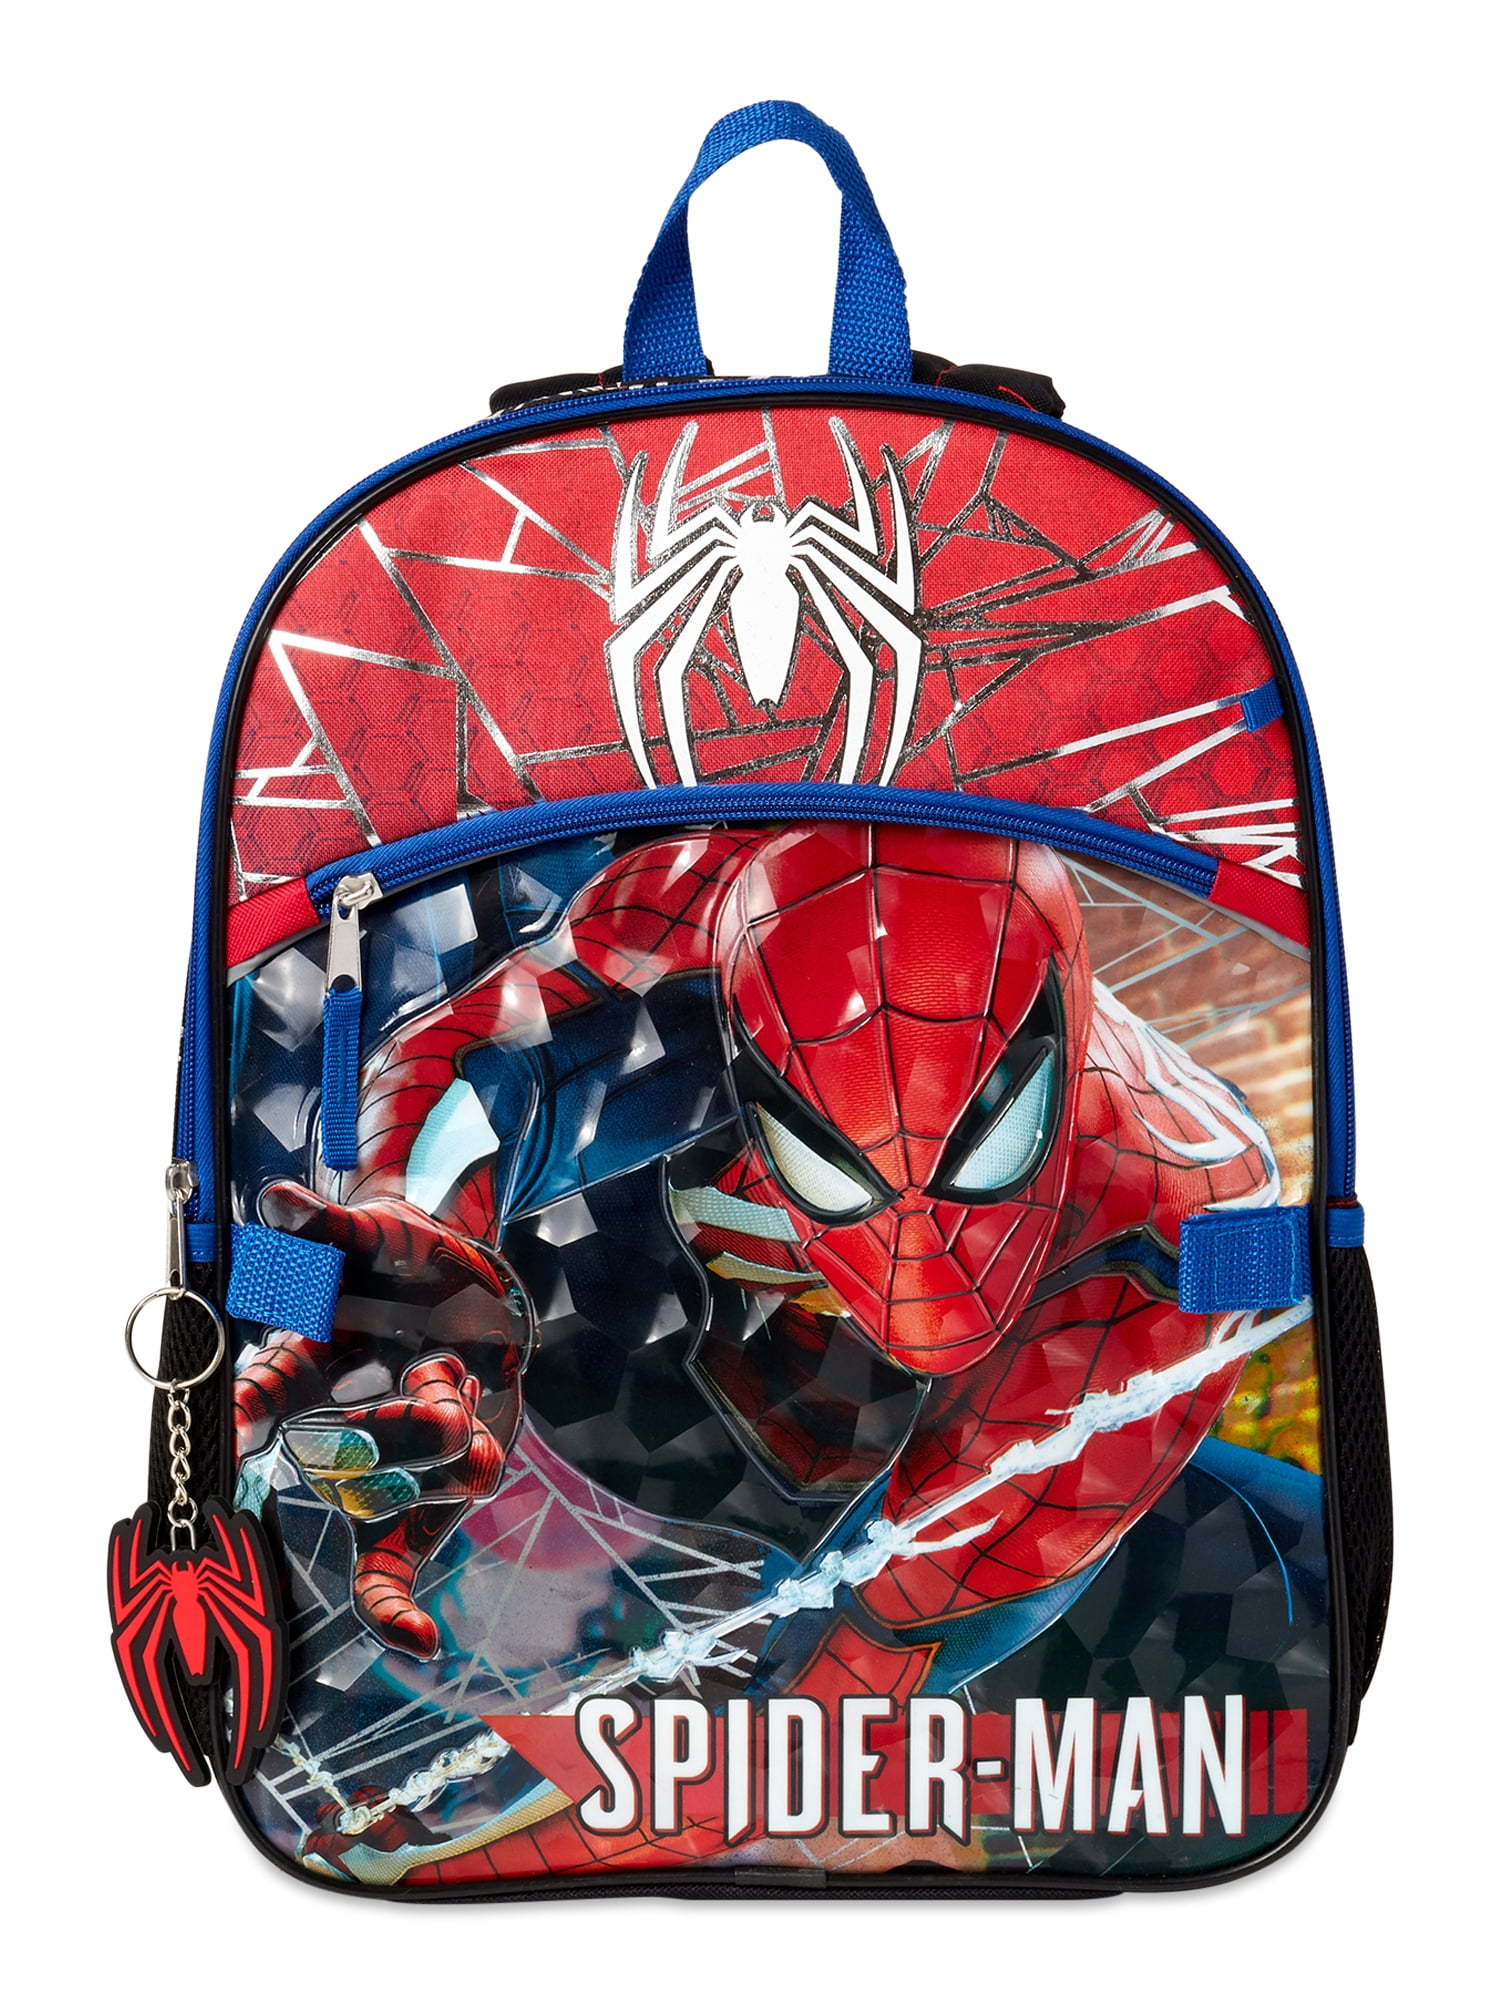 Spider-Man 5 Piece Backpack Set - Walmart.com